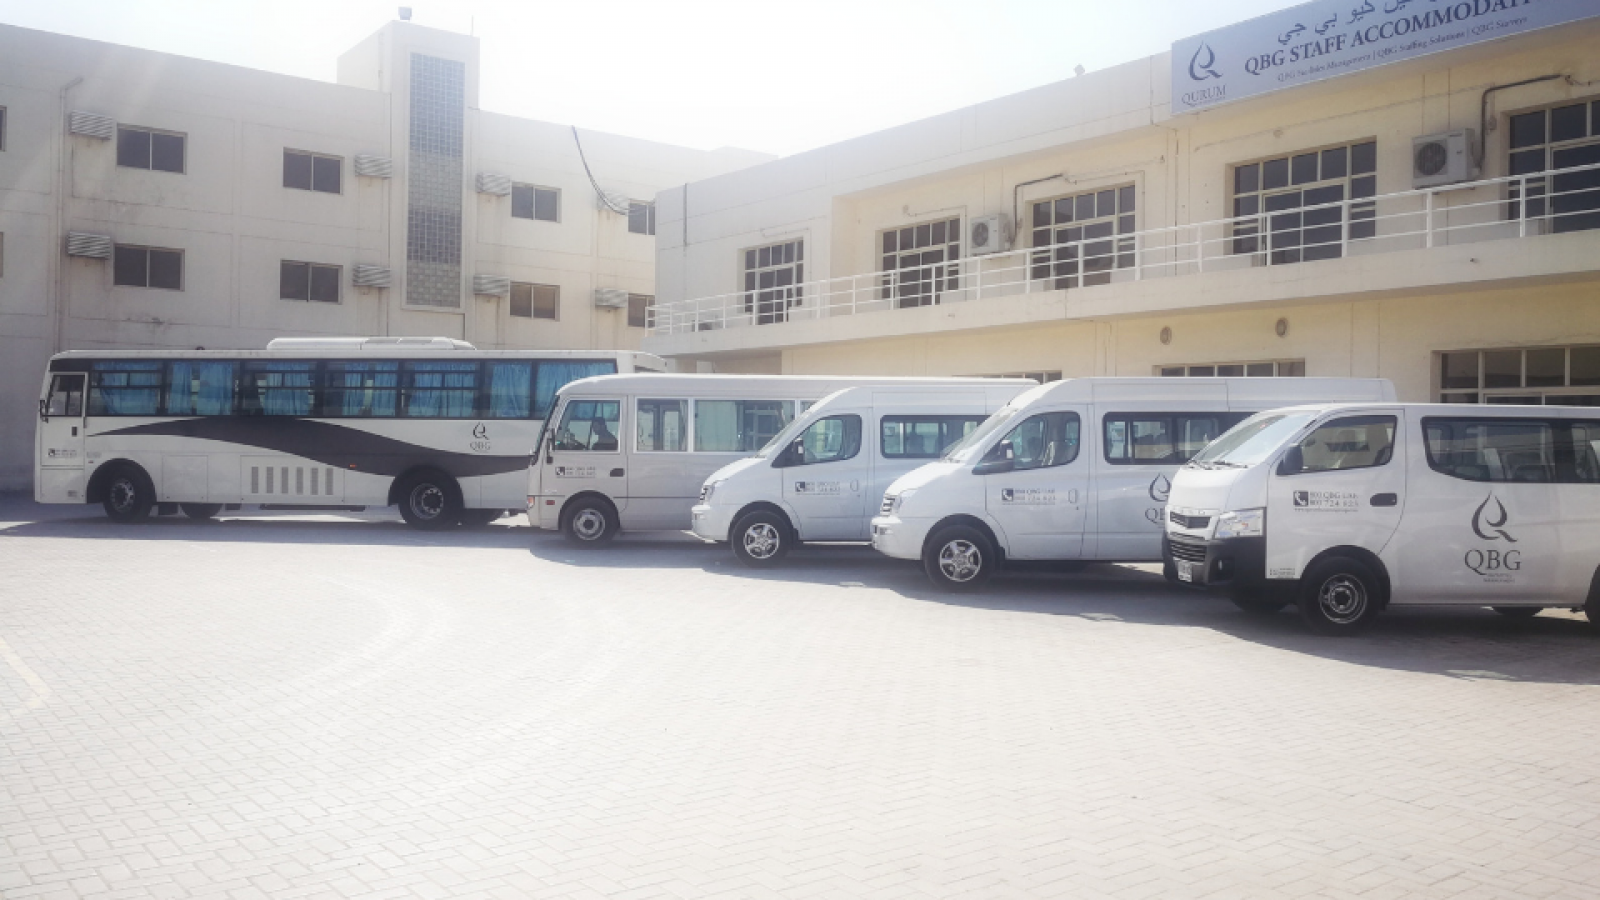 Qurum Business Group Receives New Fleet of Vehicles